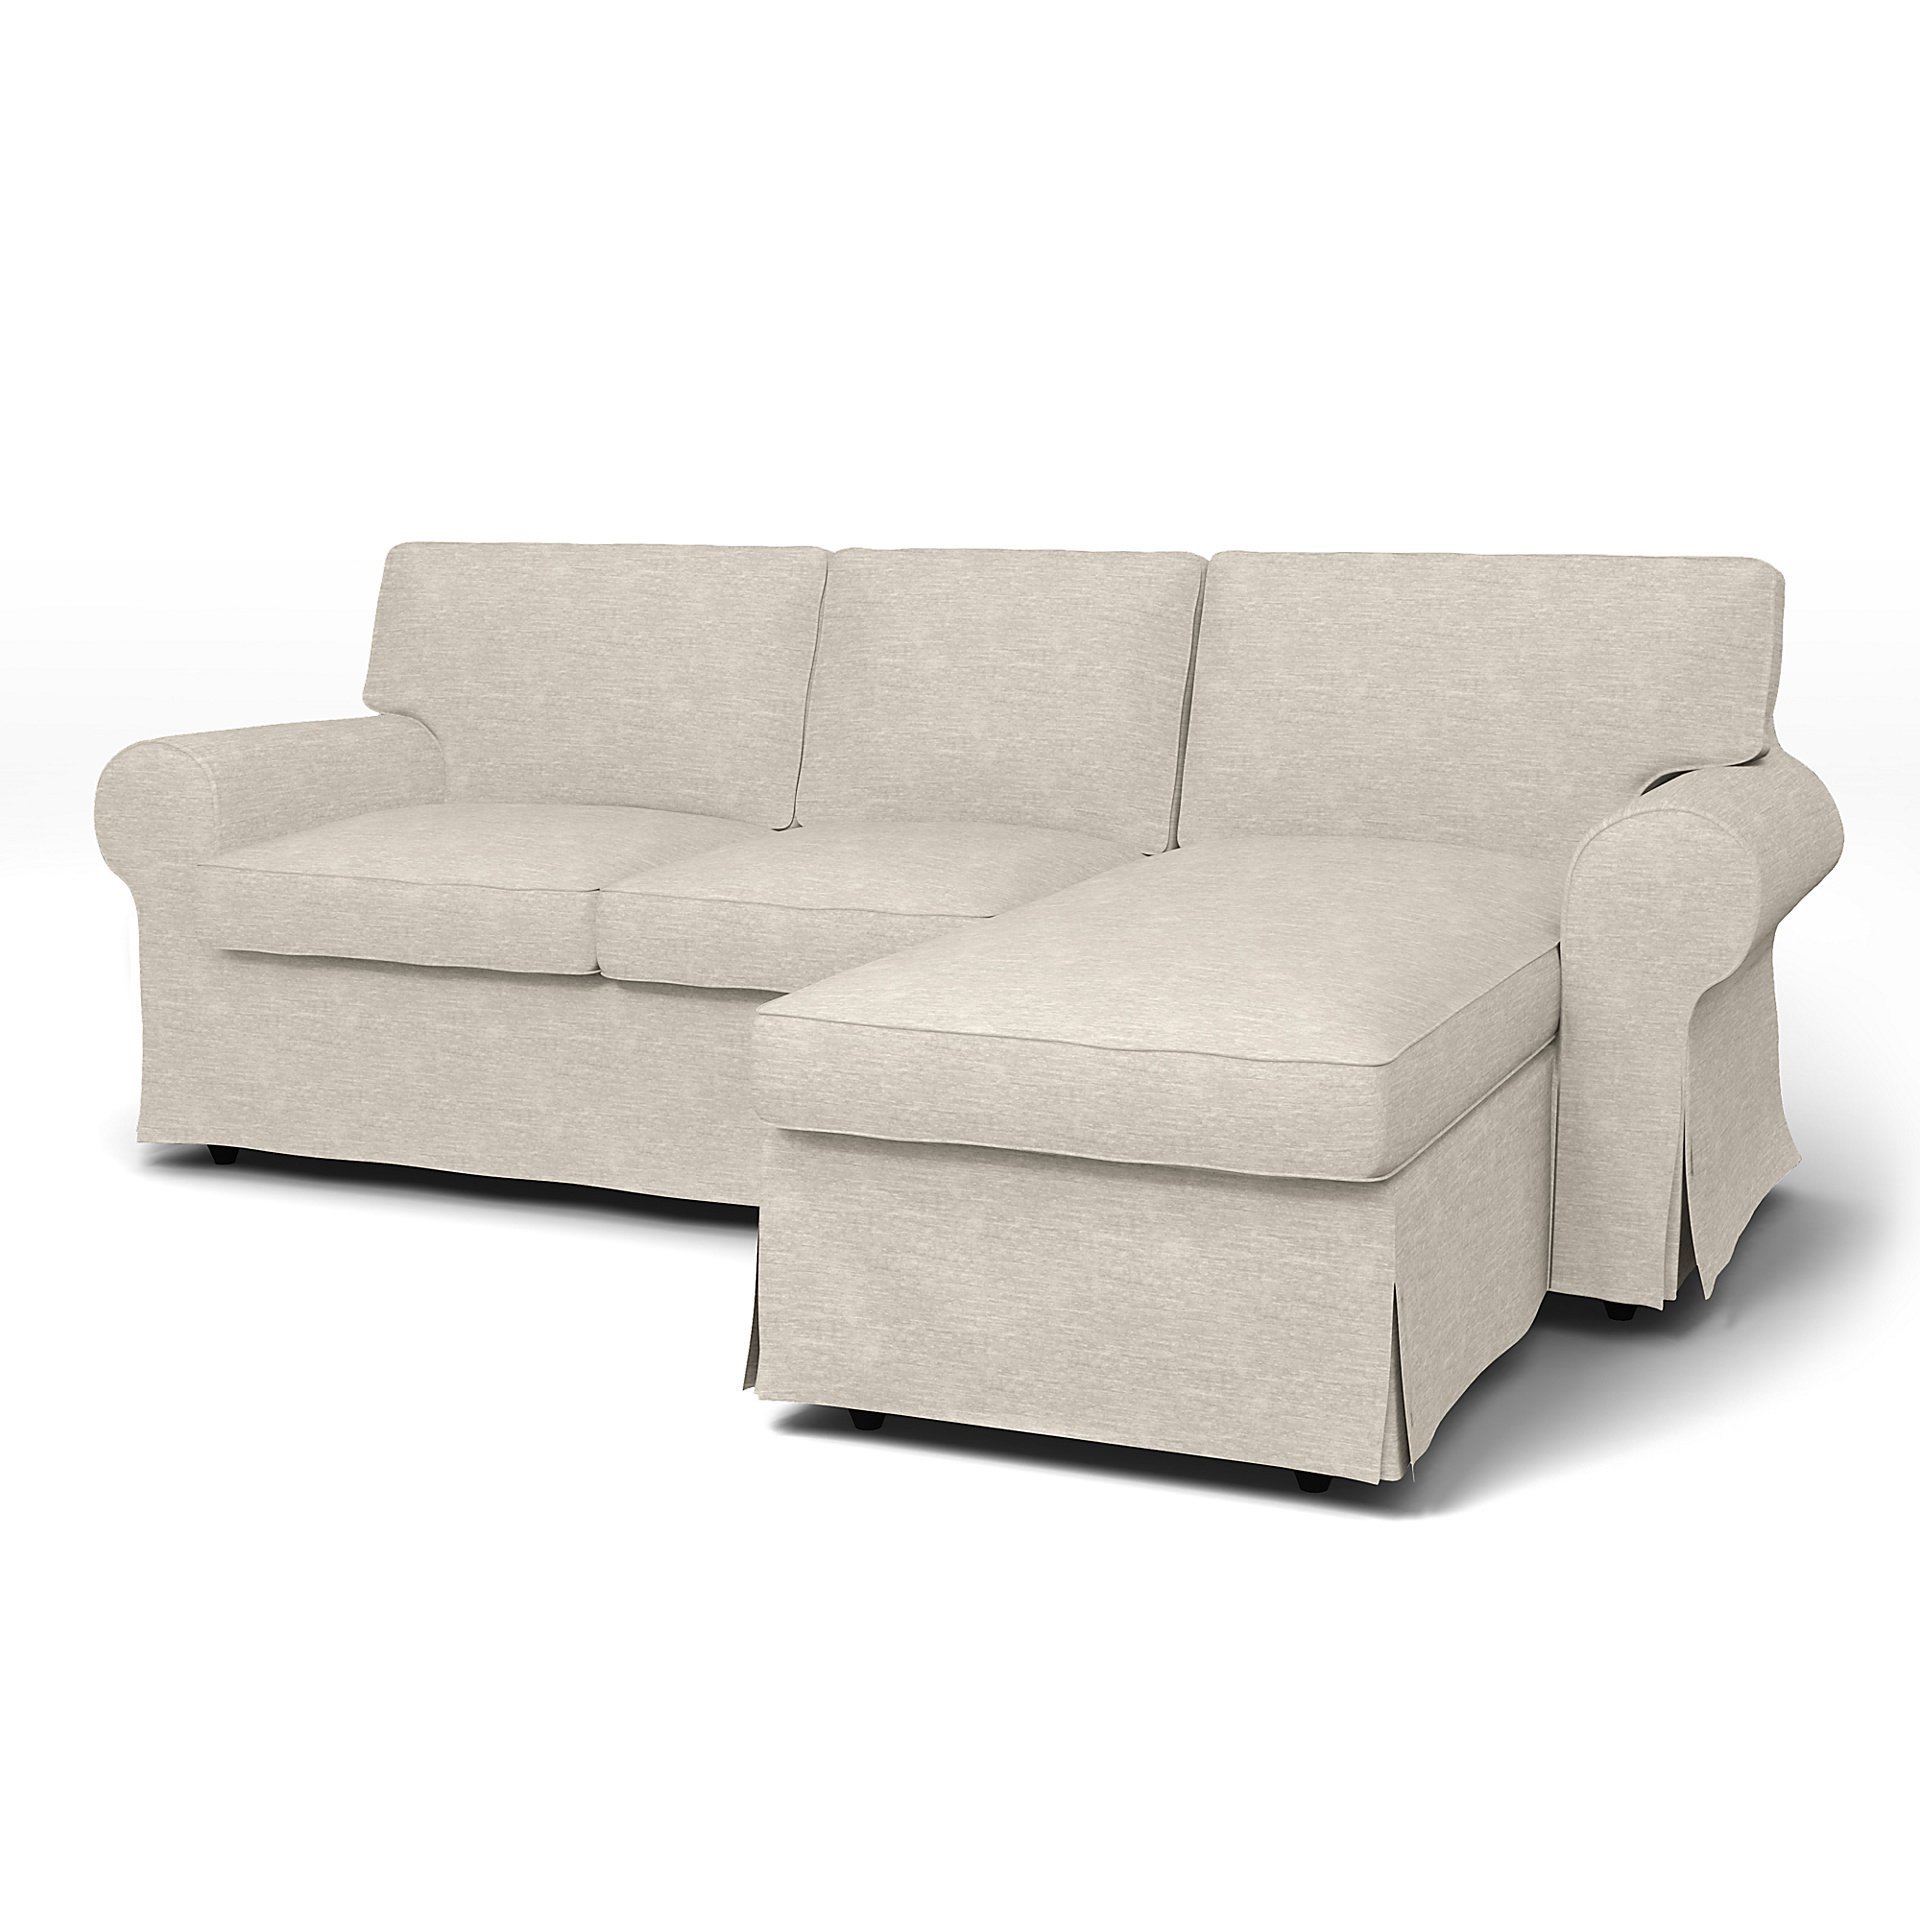 IKEA - Ektorp 3 Seater Sofa with Chaise Cover, Natural White, Velvet - Bemz